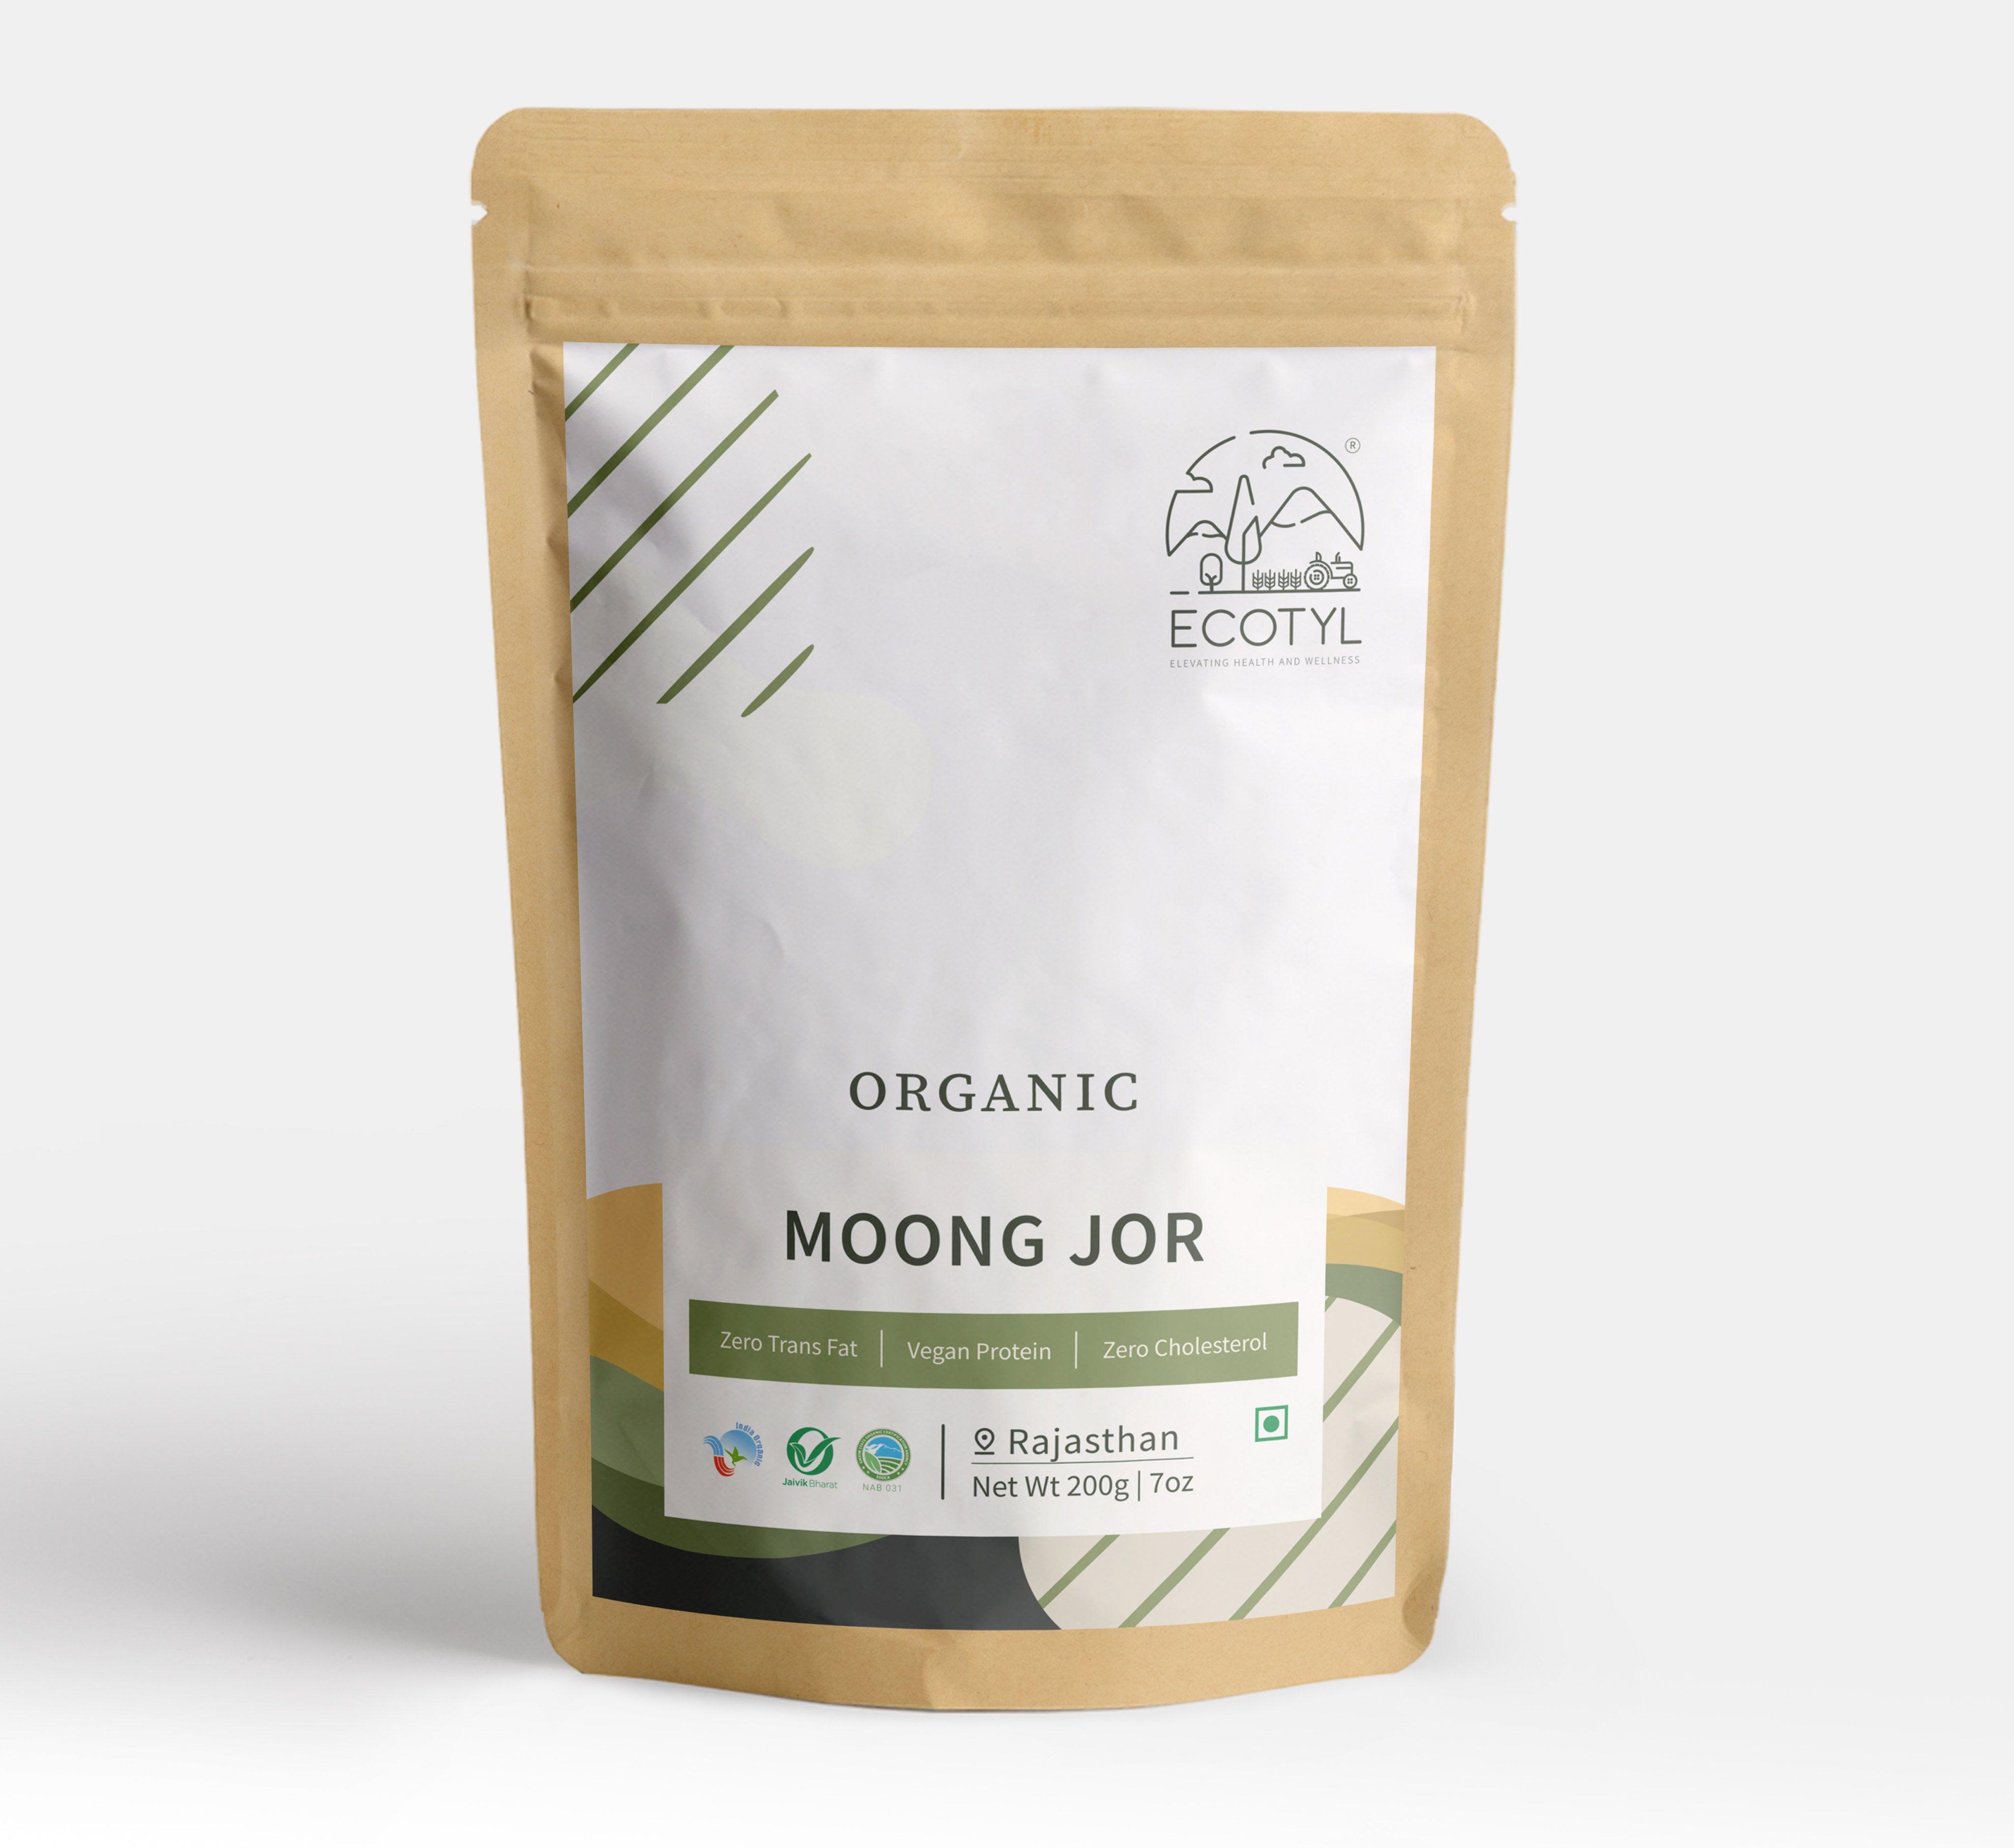 Buy Ecotyl Organic Moong Jor - 200 g at Best Price Online